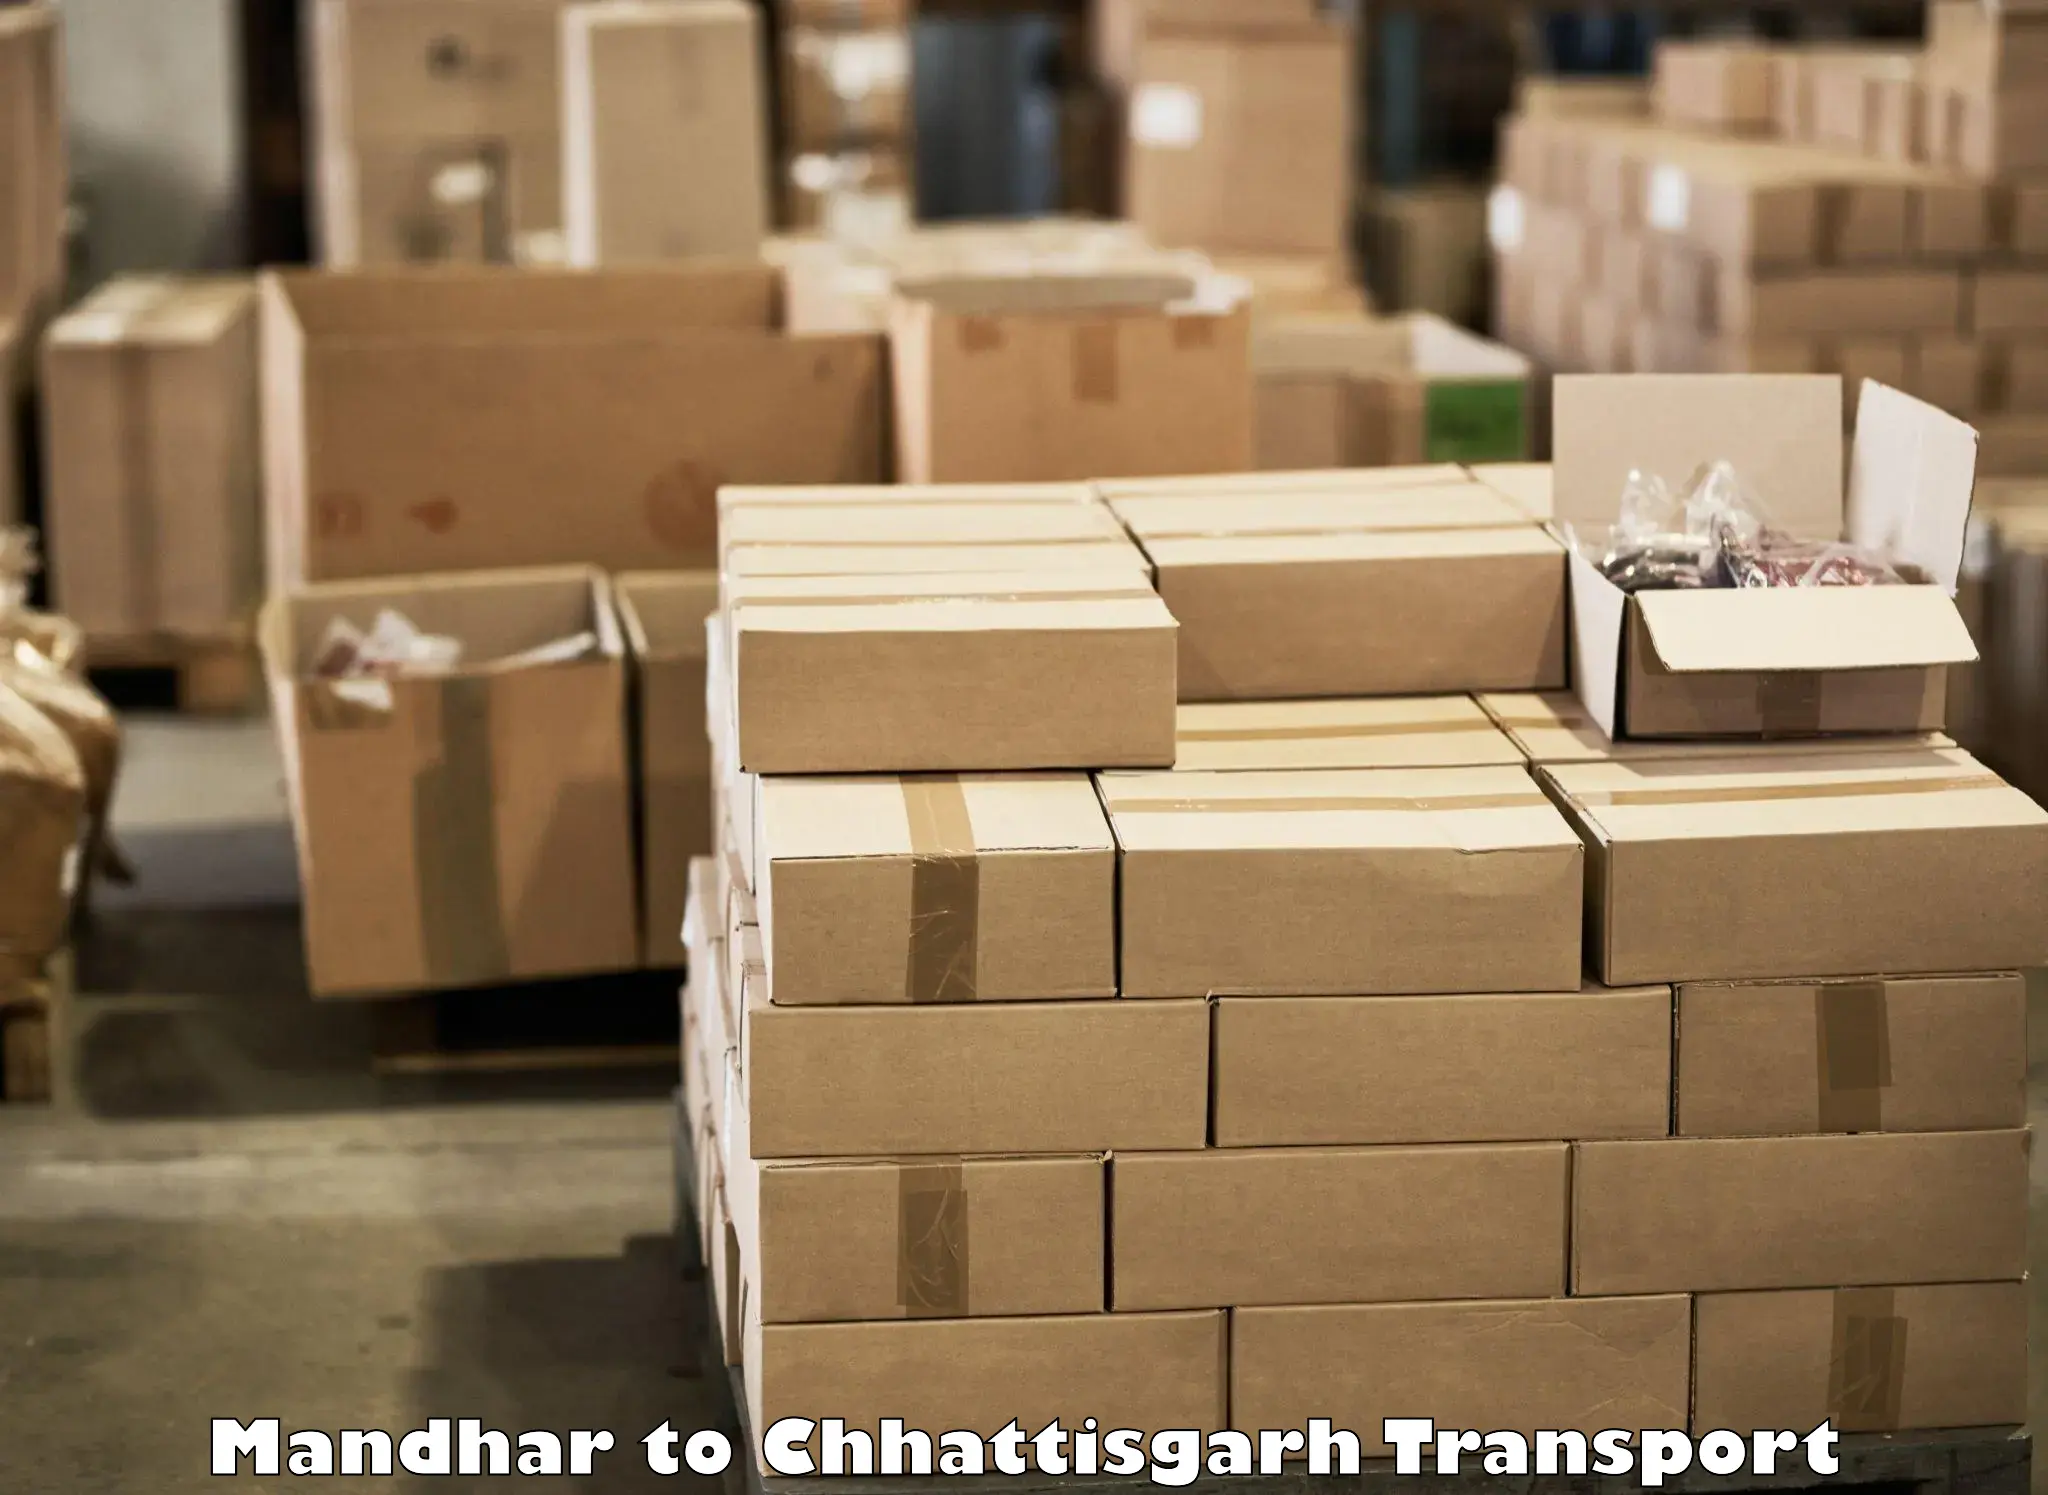 Truck transport companies in India Mandhar to Mandhar